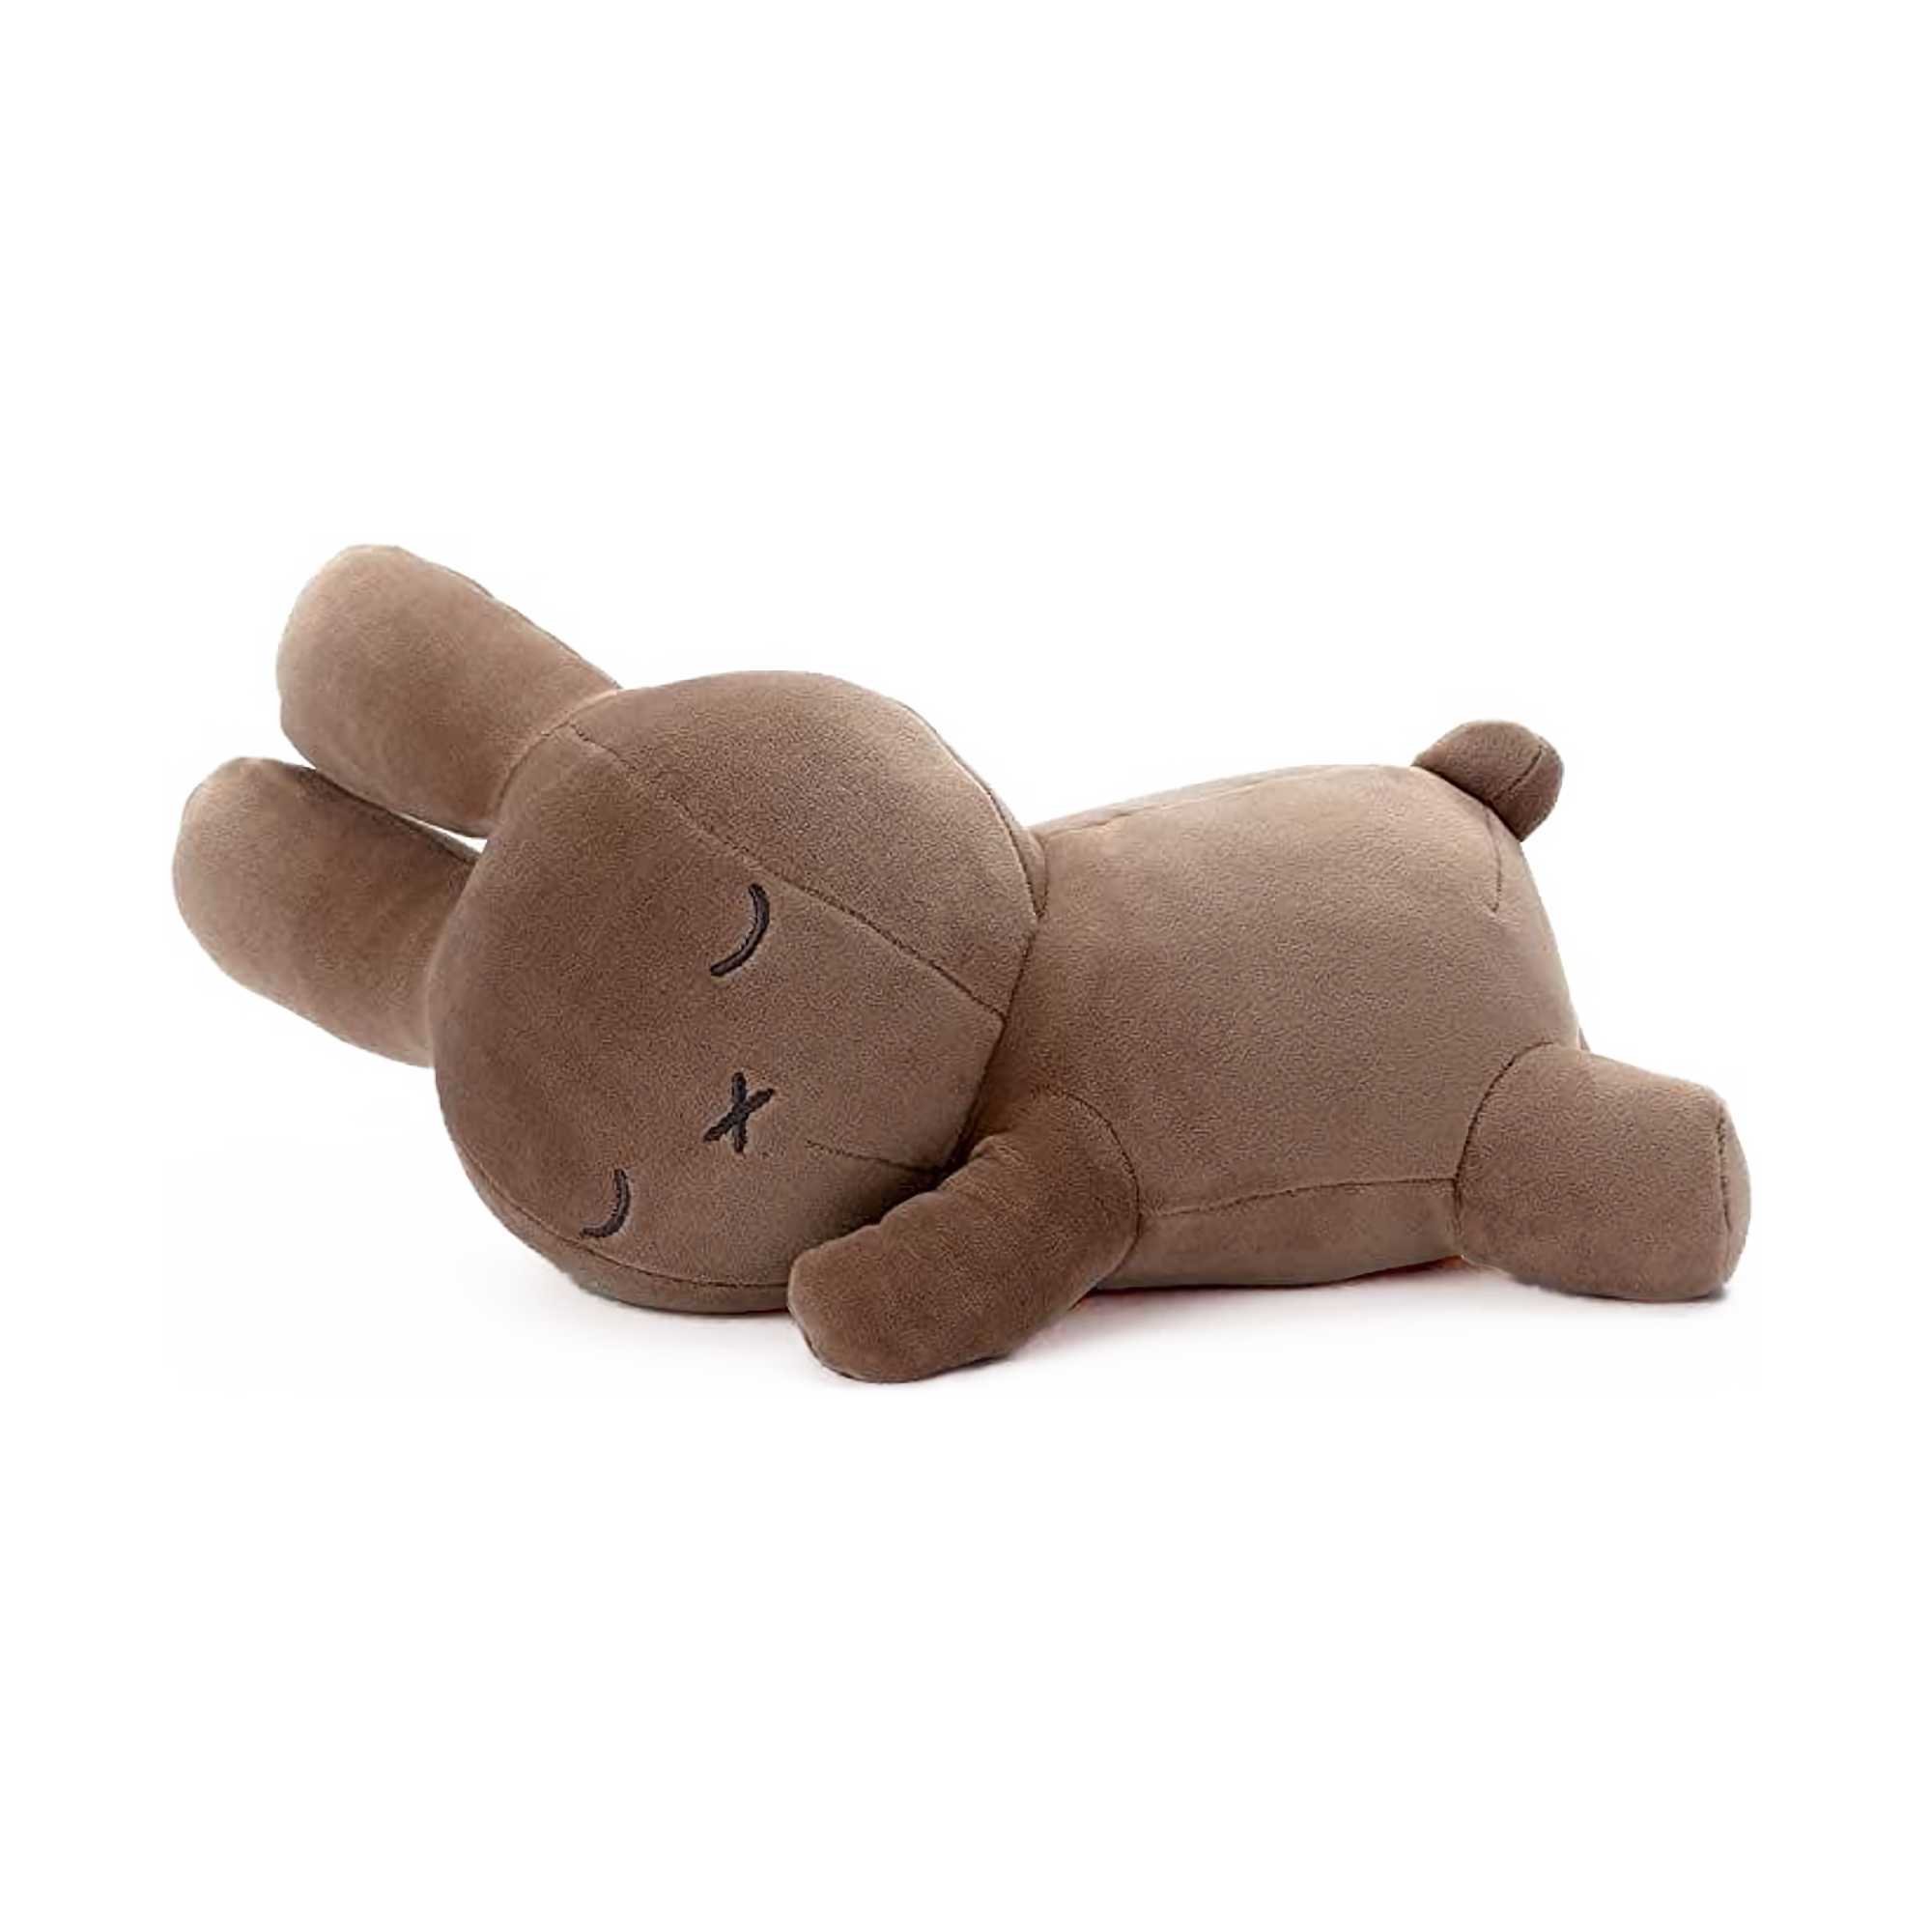 Miffy Sleeping Friend Plush Toy Medium (30cm), Brown